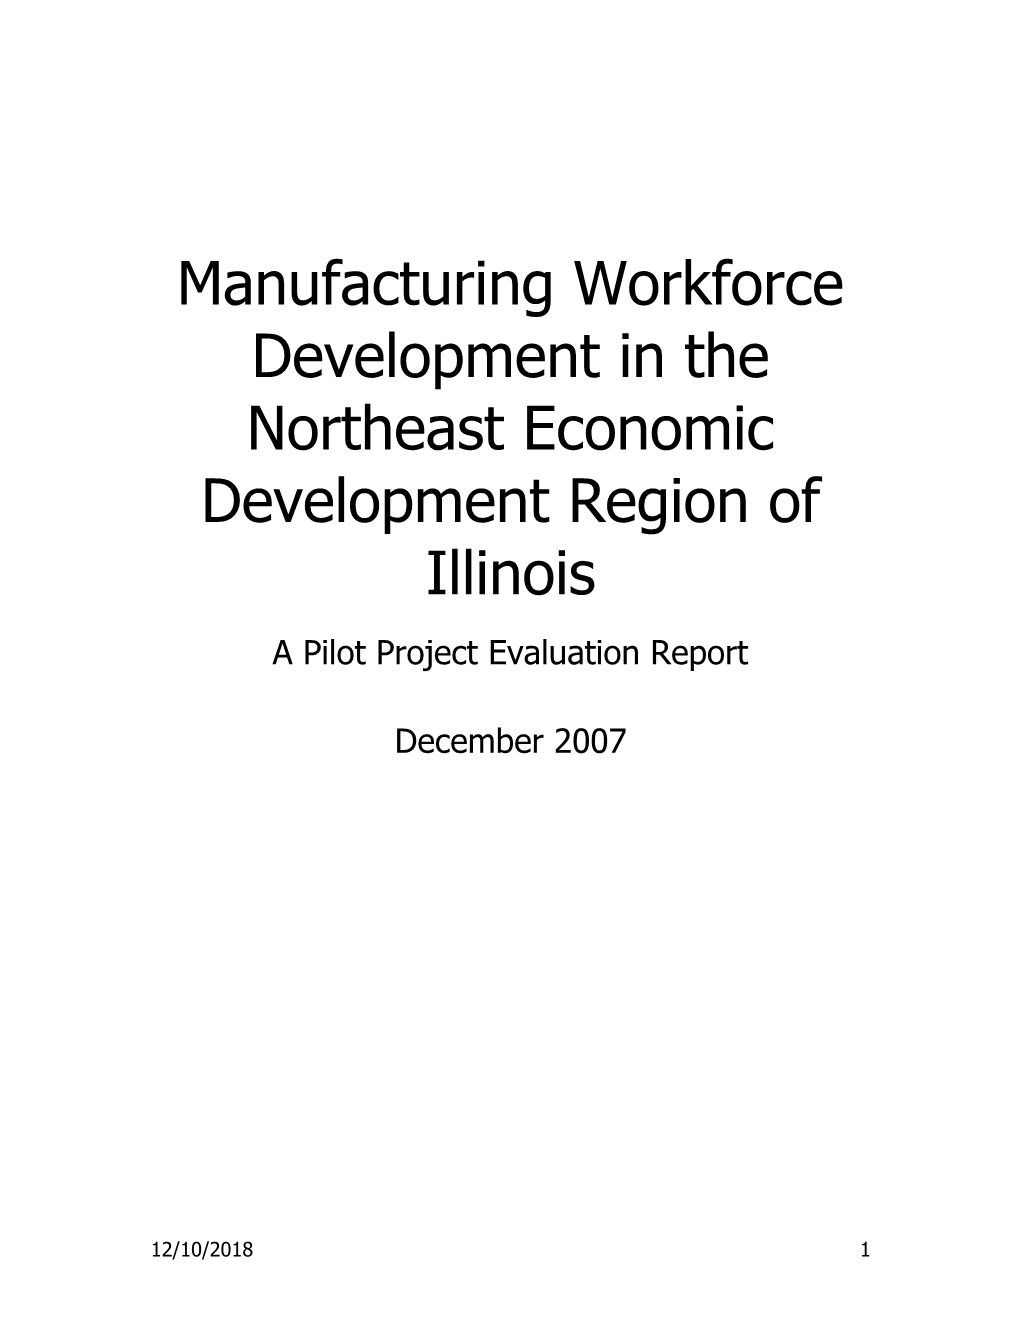 Manufacturing Workforce Development in the Northeast Economic Development Region of Illinois